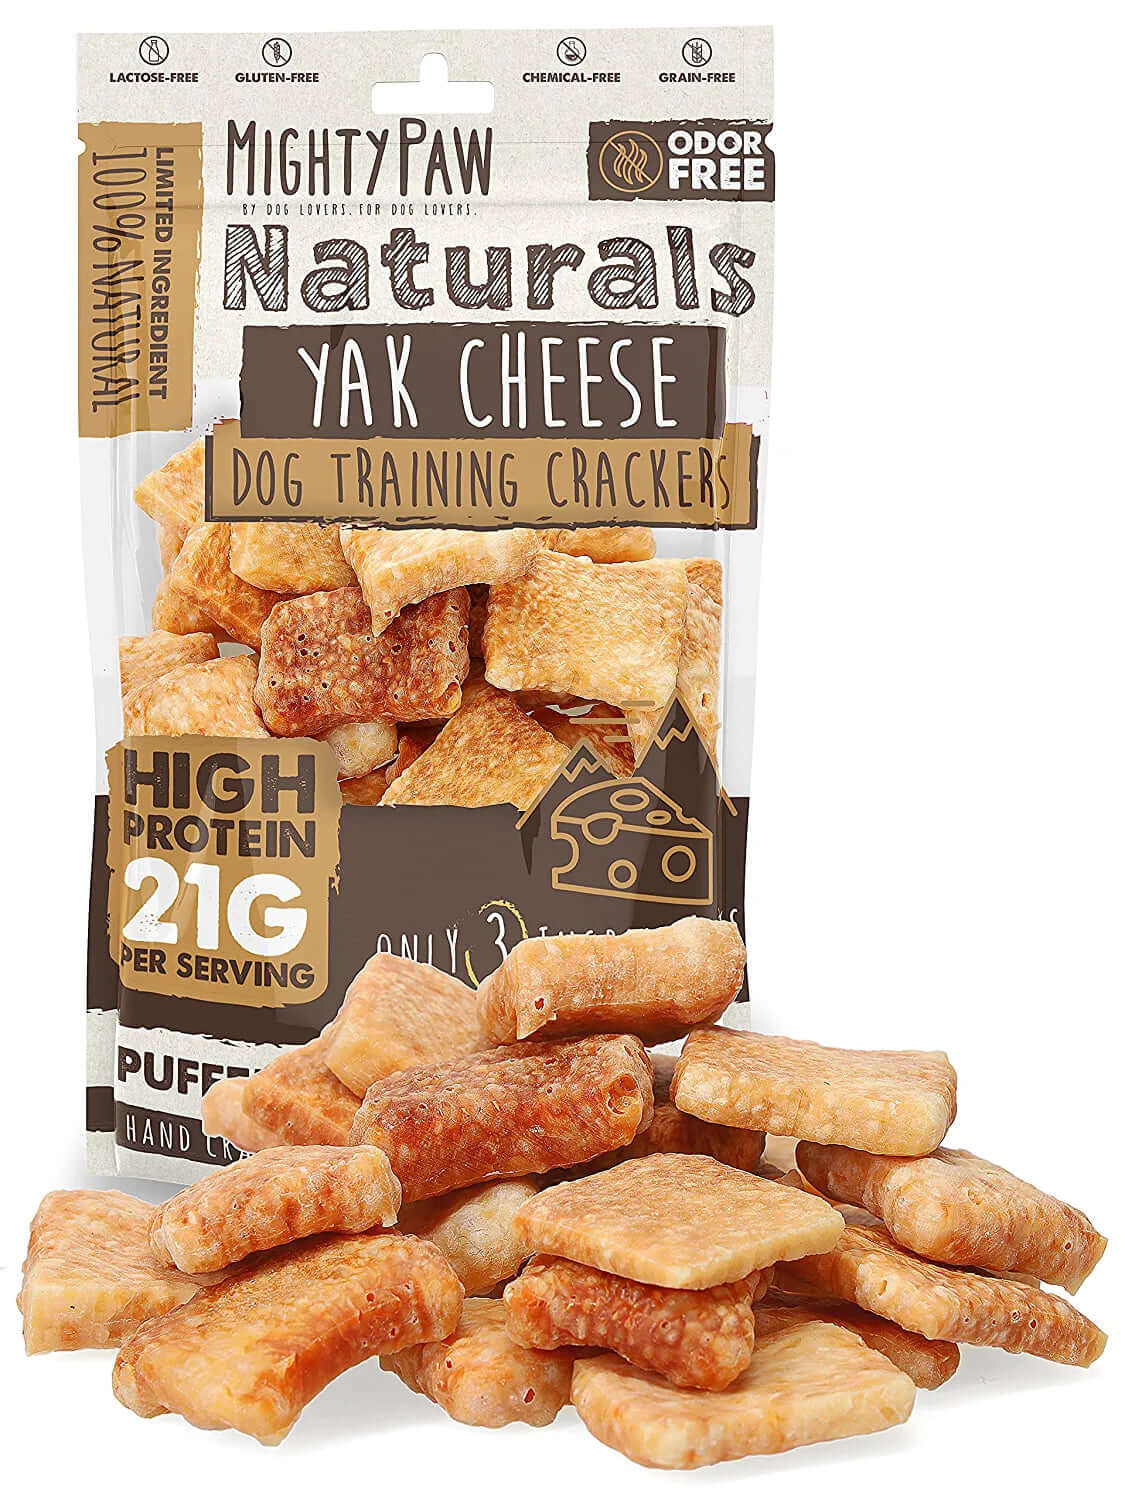 All-Natural Yak Cheese Training Crackers